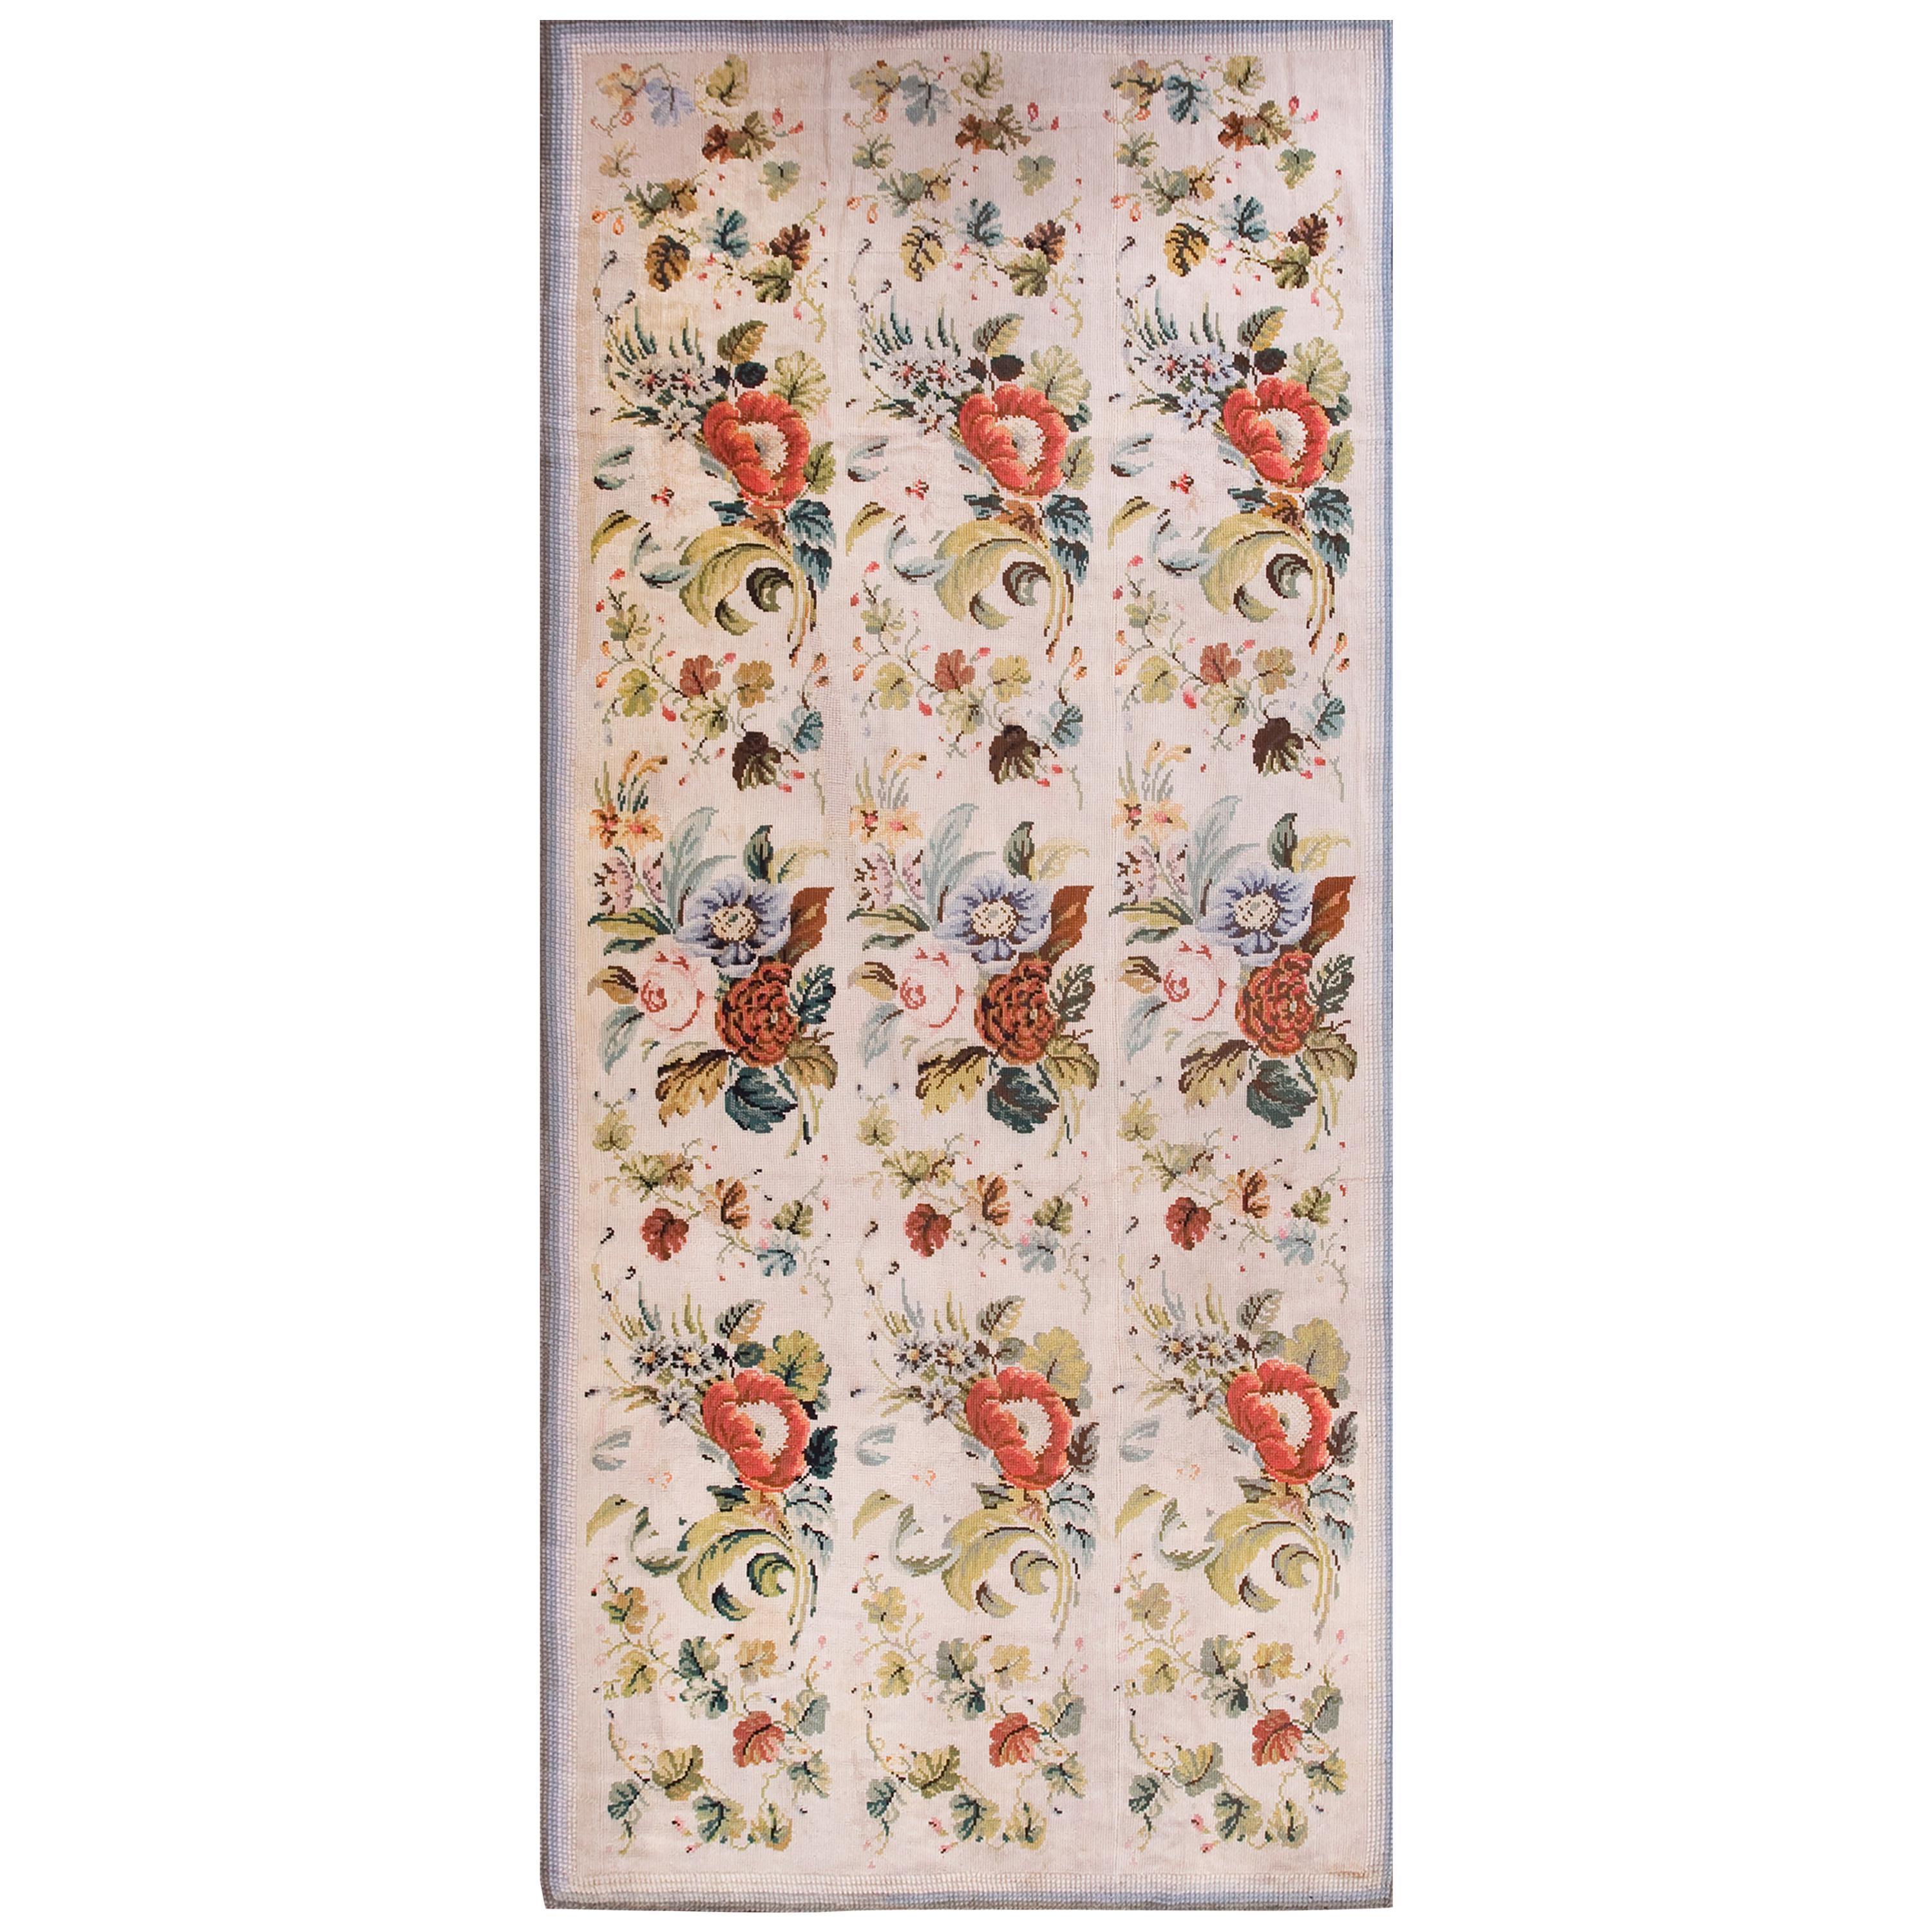 19th Century English Needlepoint Carpet ( 5'9" x 12'8 - 175 x 386 )